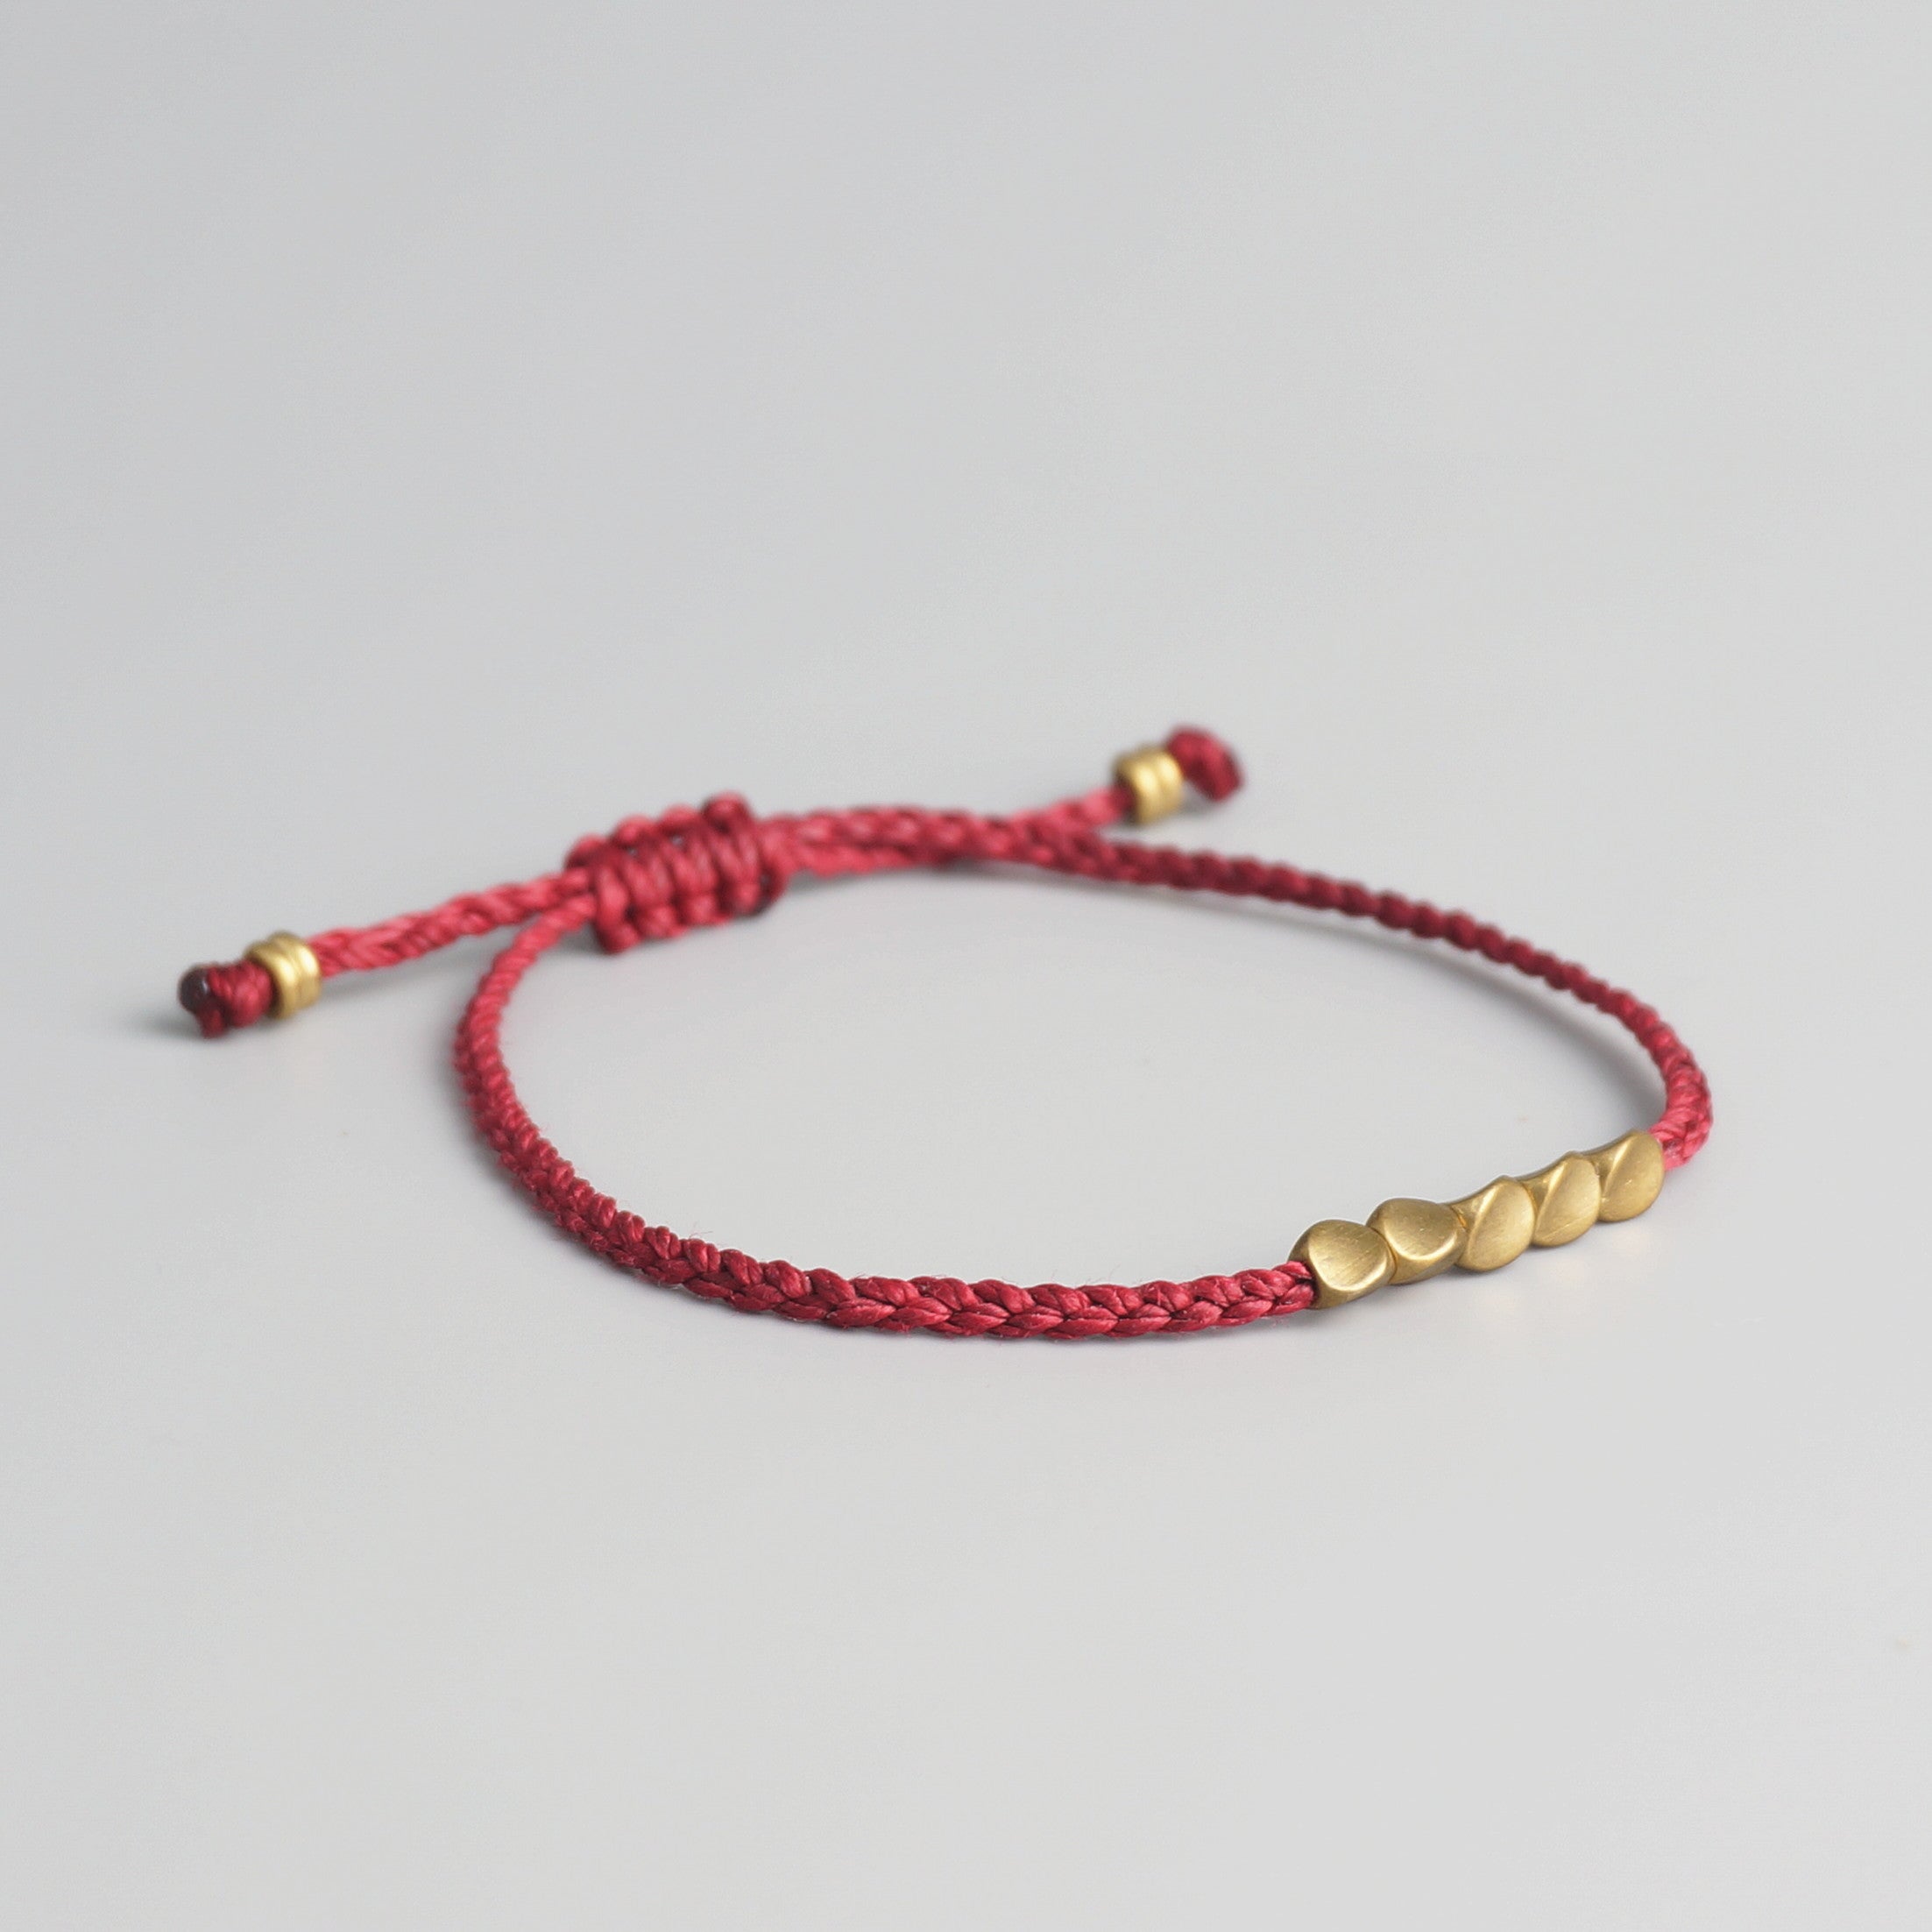 Handmade Tibetan Blessed Knots for "Mantra" (Om Mani Padme Hum - Zen)